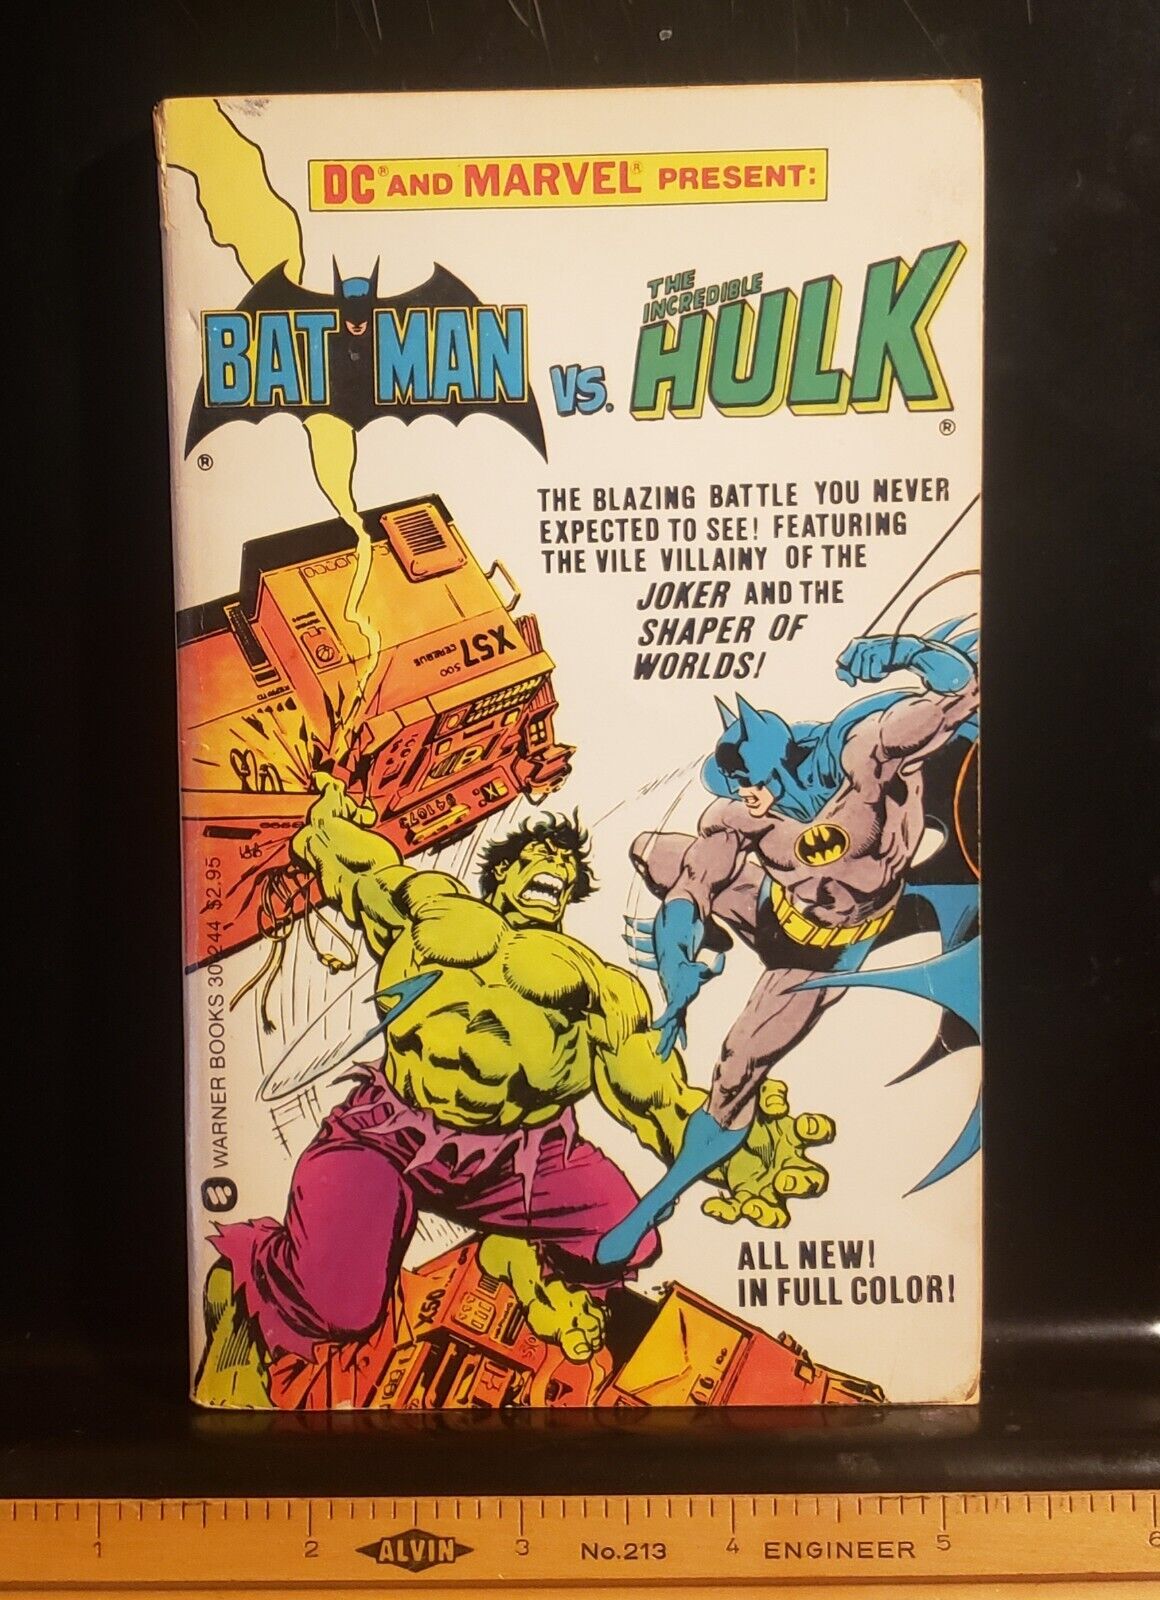 VTG Batman vs The Incredible Hulk First Printing 1981 DC Marvel Comic Paperback